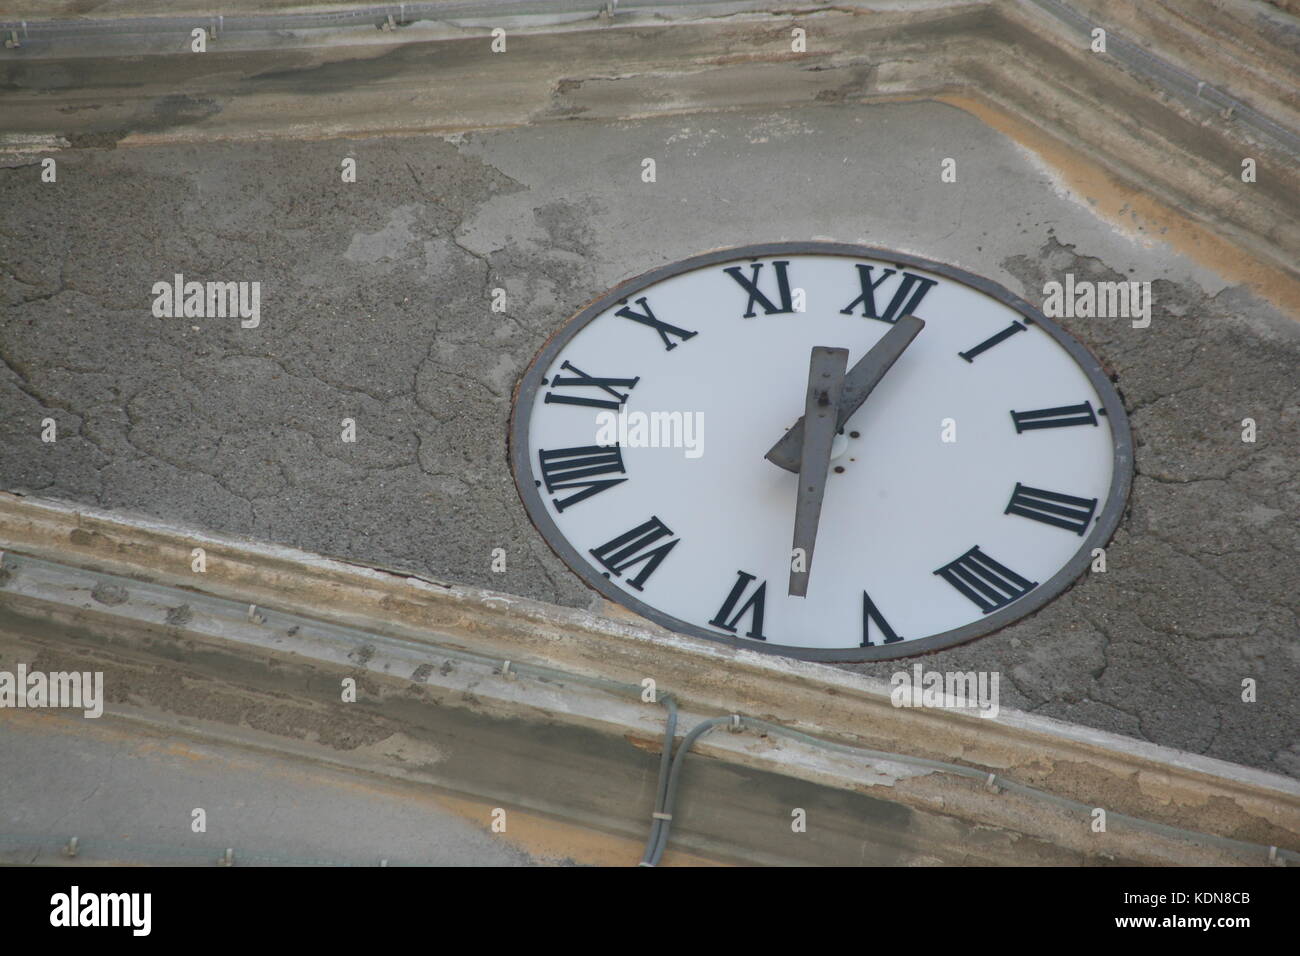 Uhr mit römischen Zahlen - Orologio con i numeri romani Foto Stock